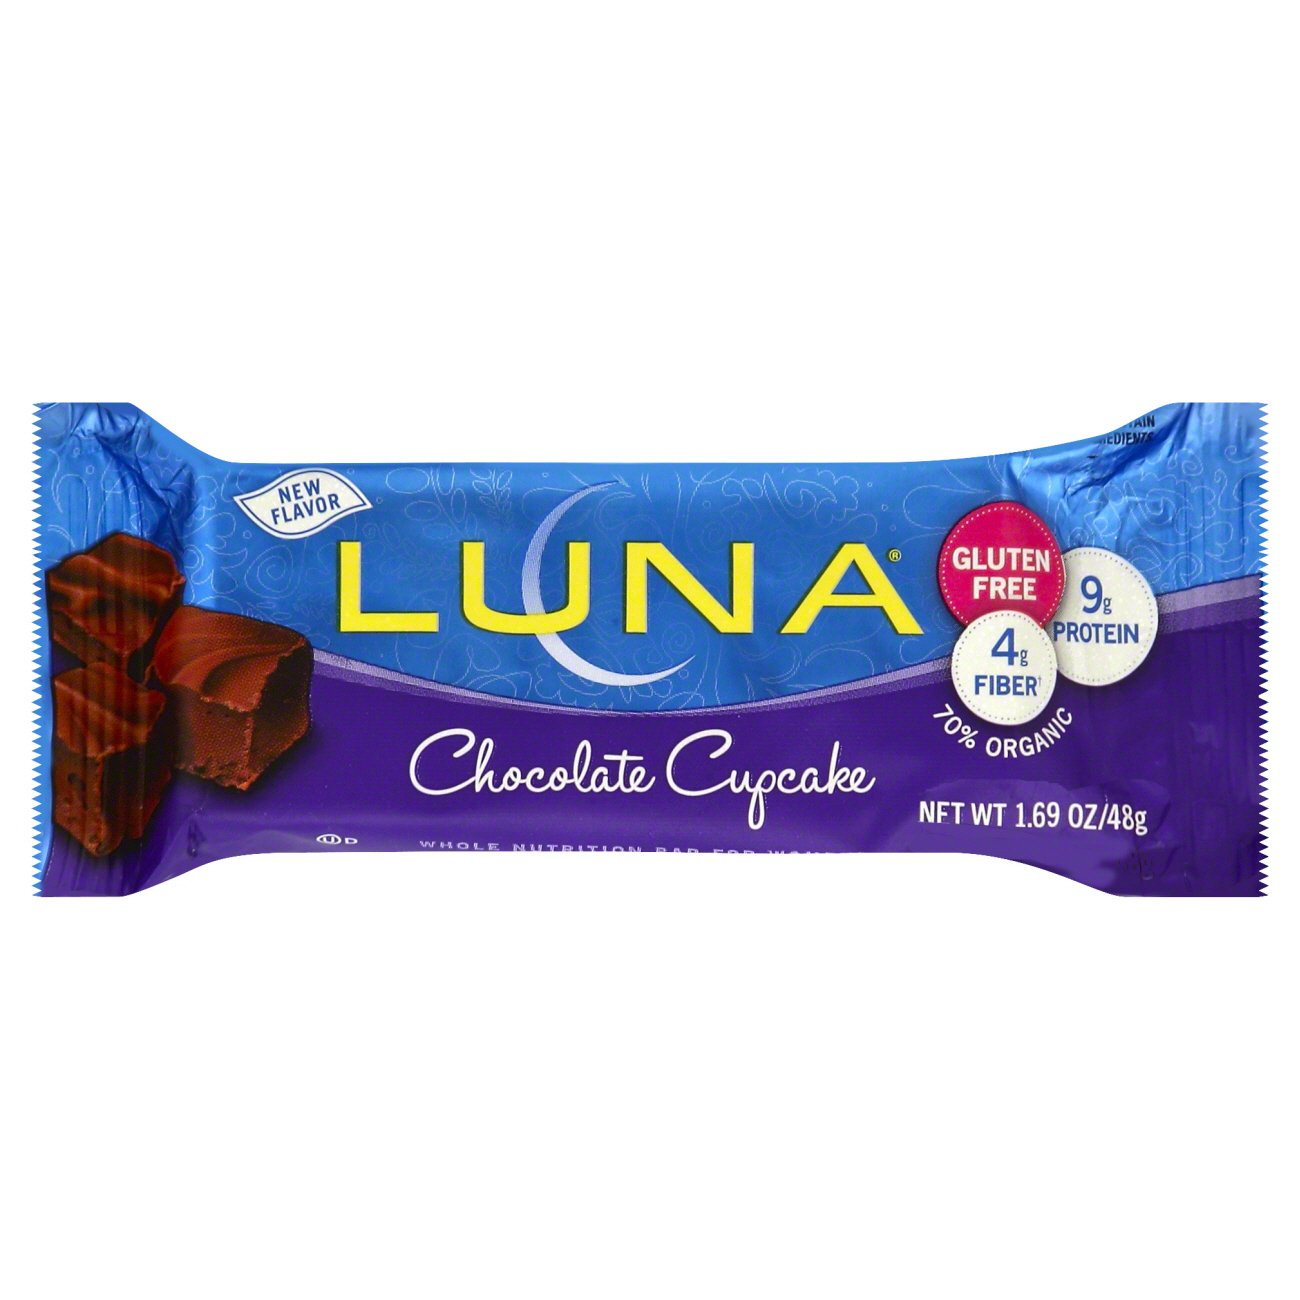 Luna Chocolate Cupcake Shop Granola Snack Bars At H E B